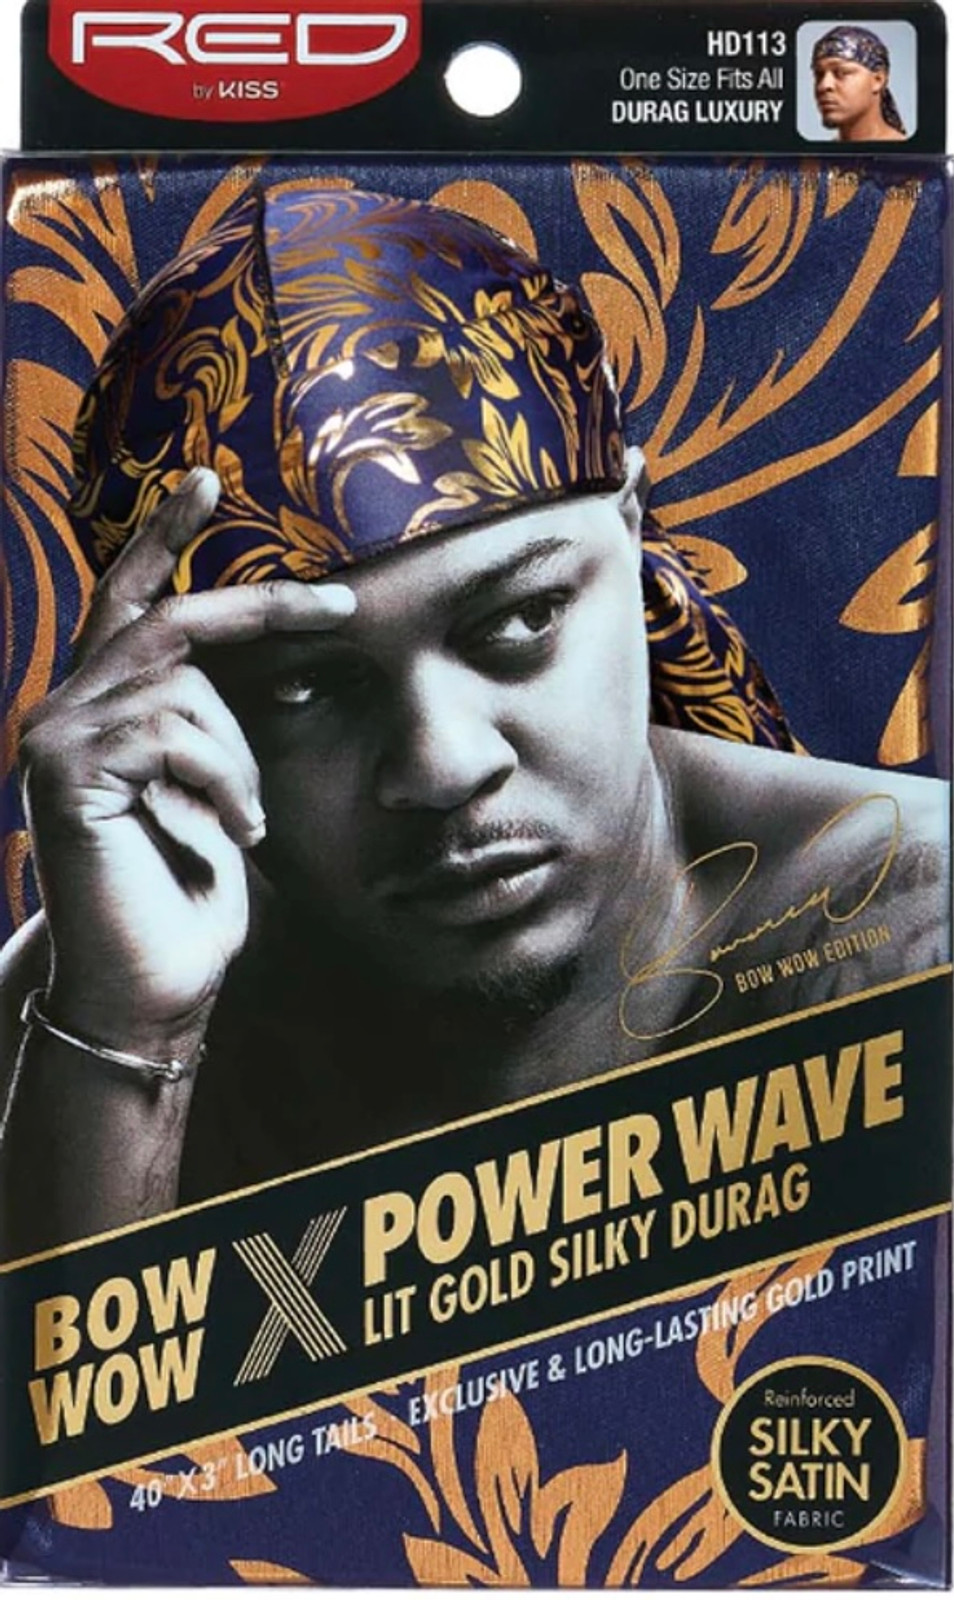 Power Wave Silky Satin Durag - Gold